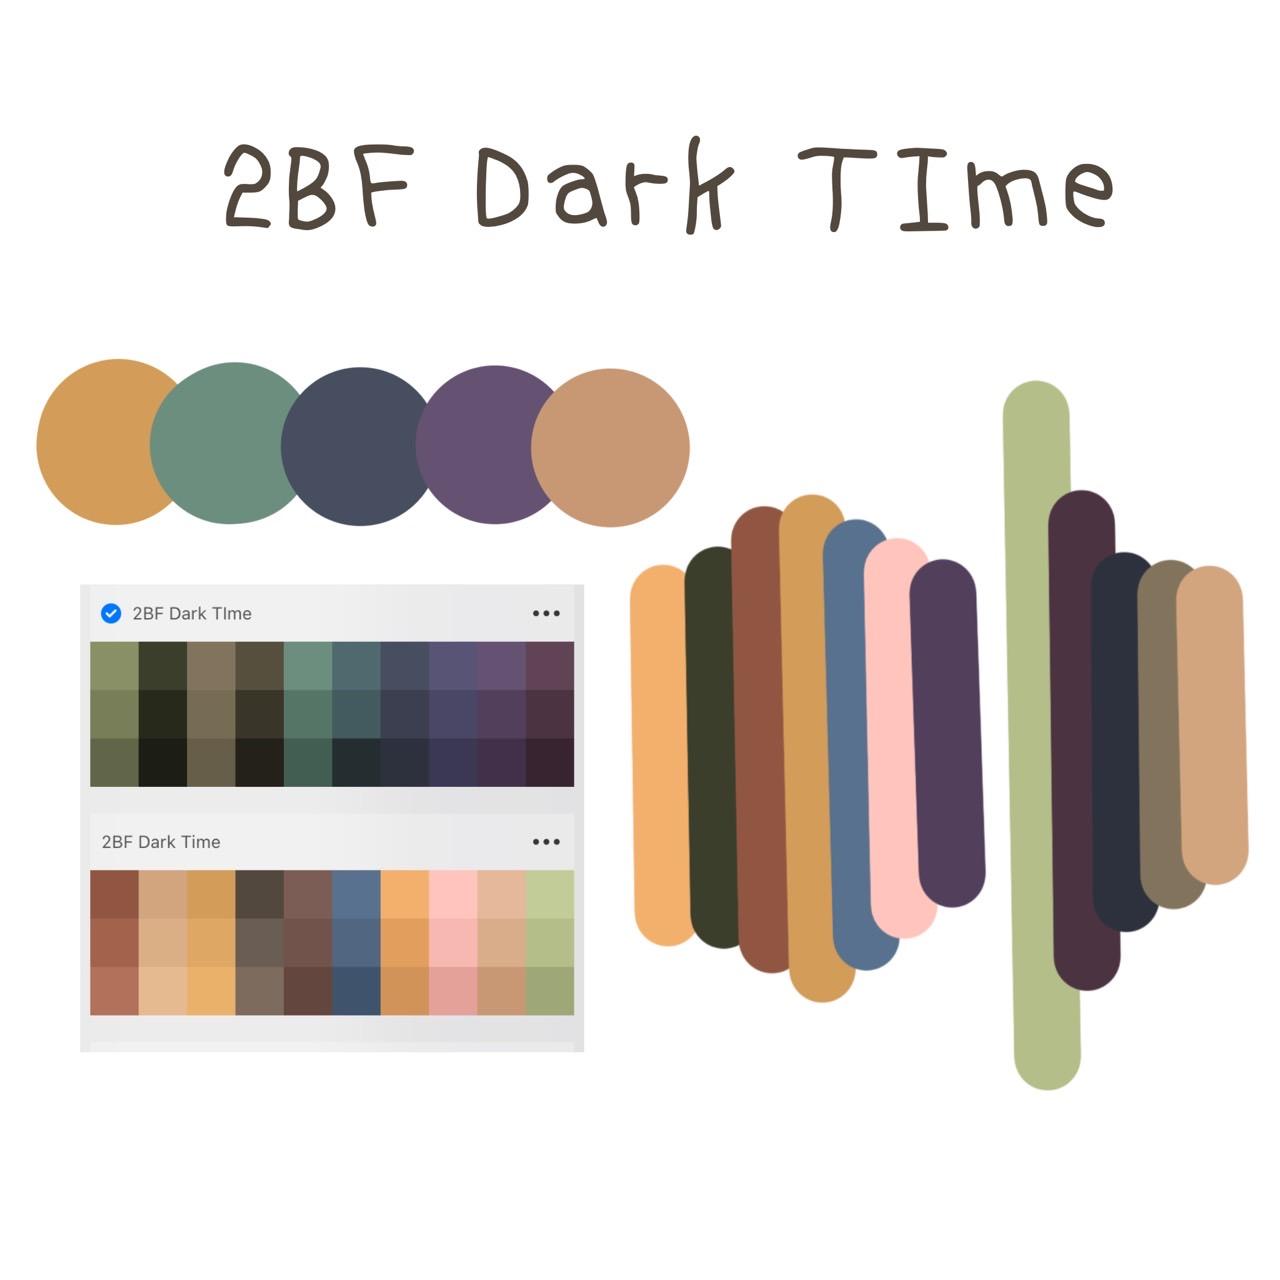 2BF Dark Time